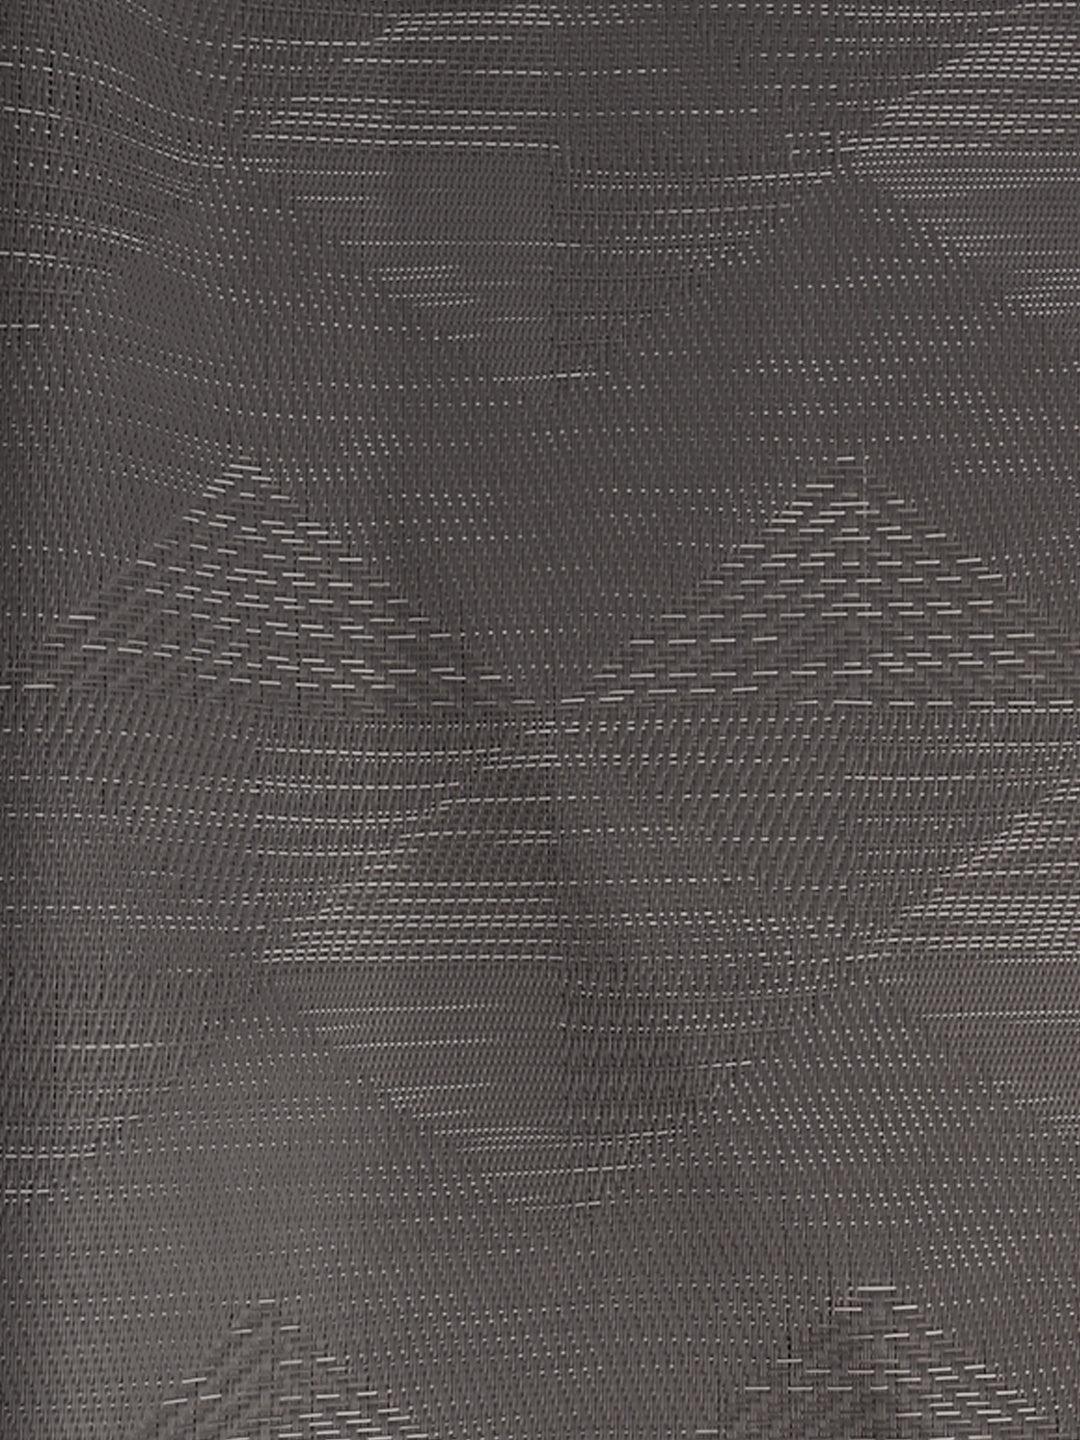 Stone Grey Tringle Pattern - Placemat Mat Set Of 4 - MARKET 99